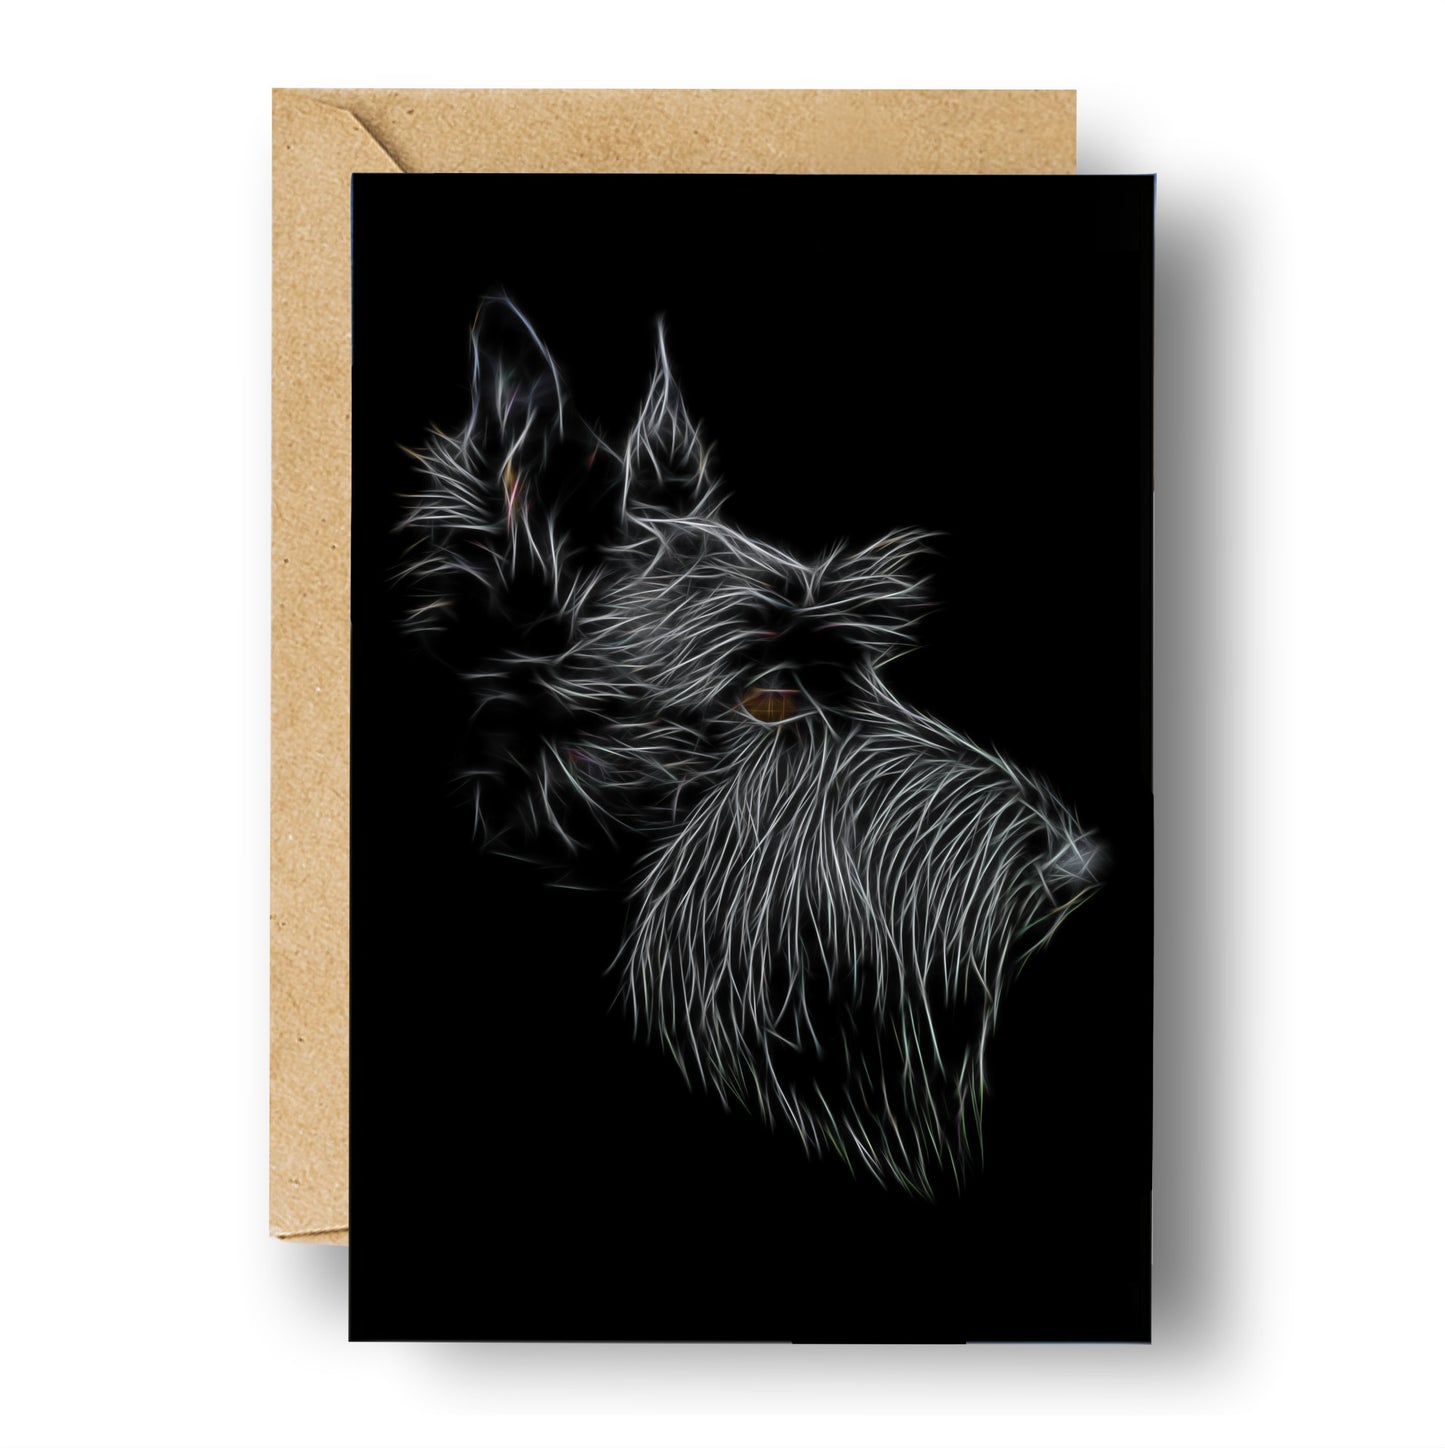 Scottish Terrier Blank Birthday Greeting Card with Stunning Fractal Art Design